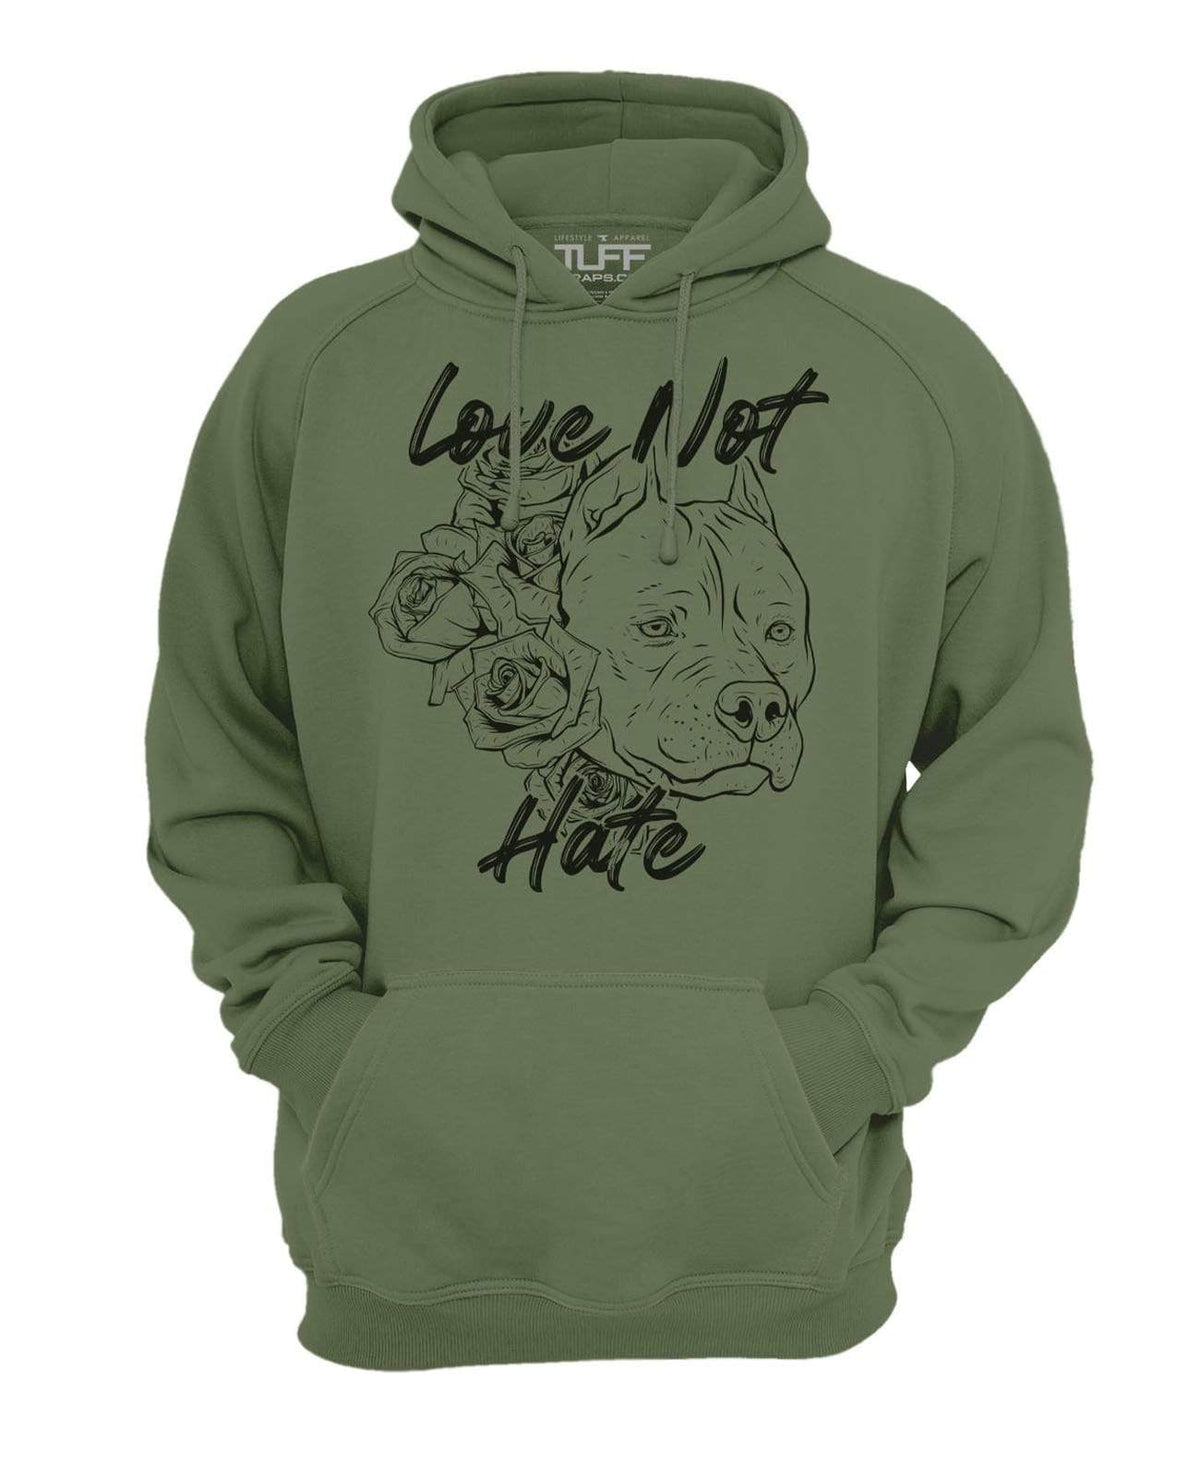 Love Not Hate Hooded Sweatshirt XS / Military Green TuffWraps.com